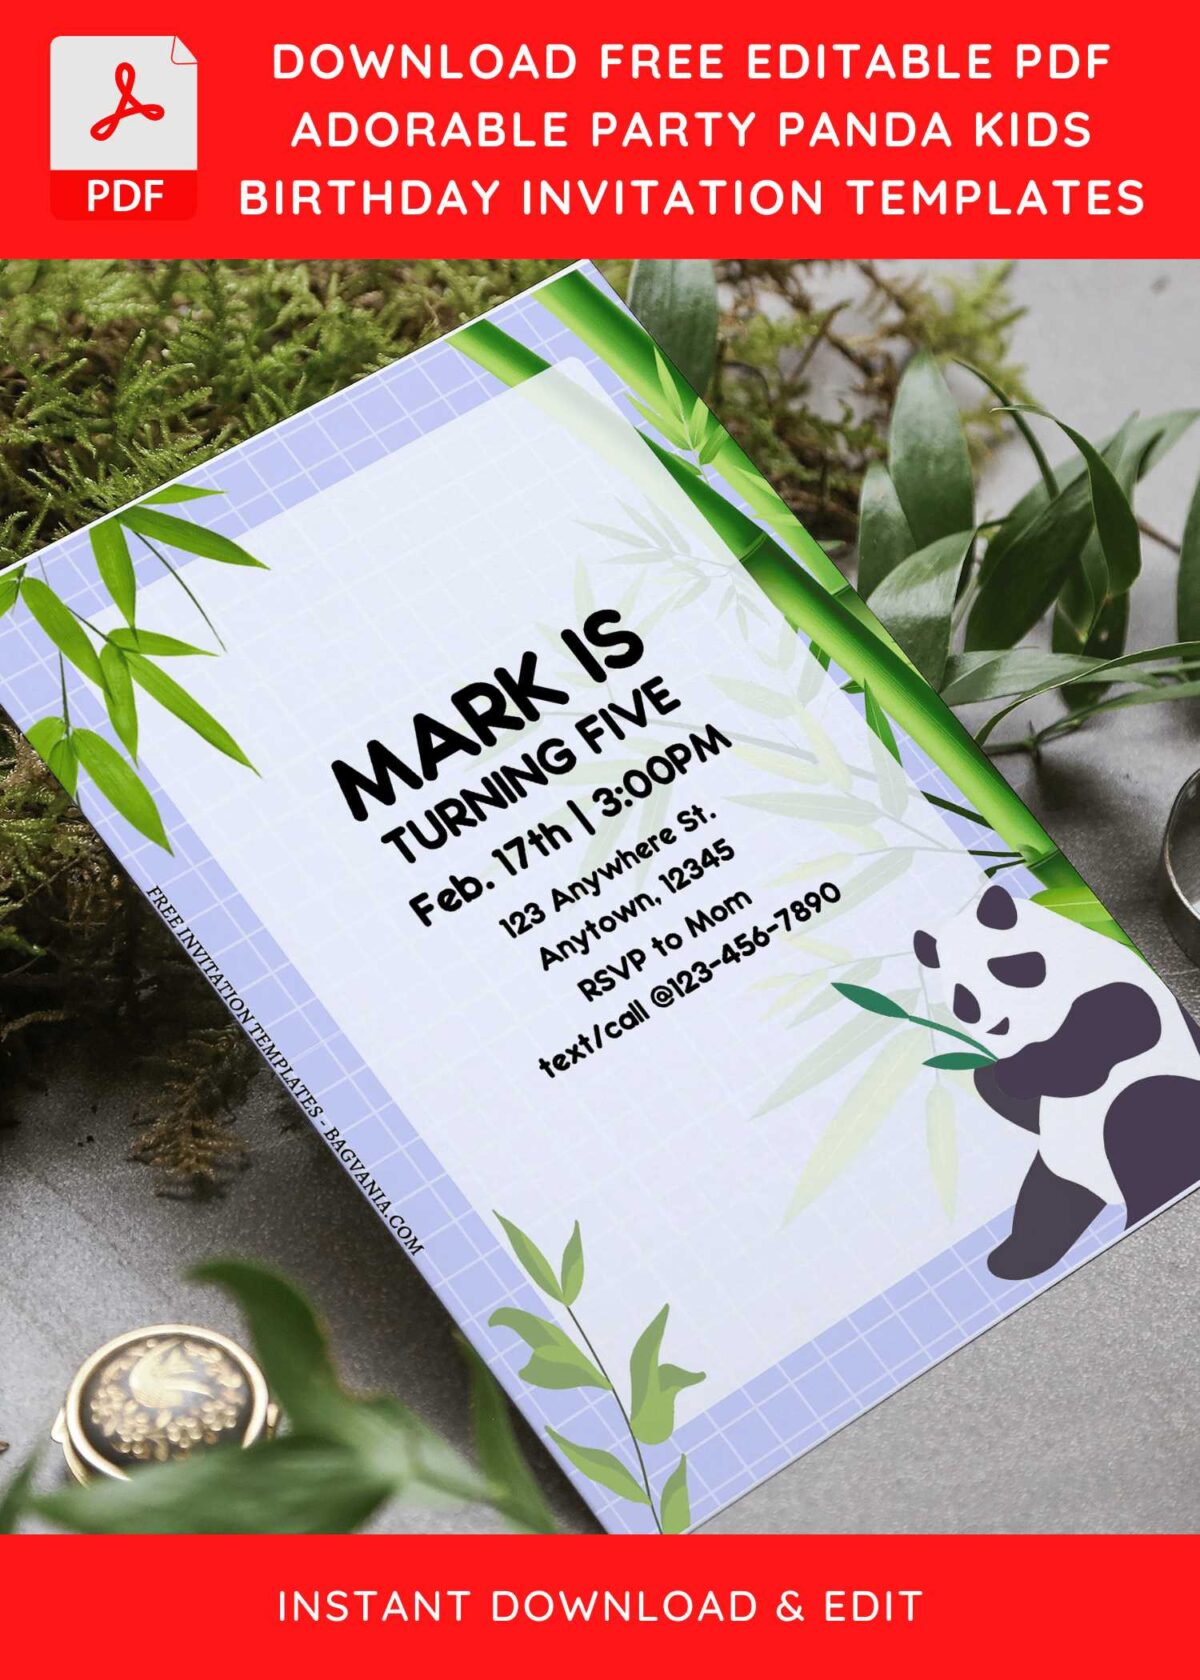 (Free Editable PDF) Playful Baby Panda Birthday Invitation Templates F